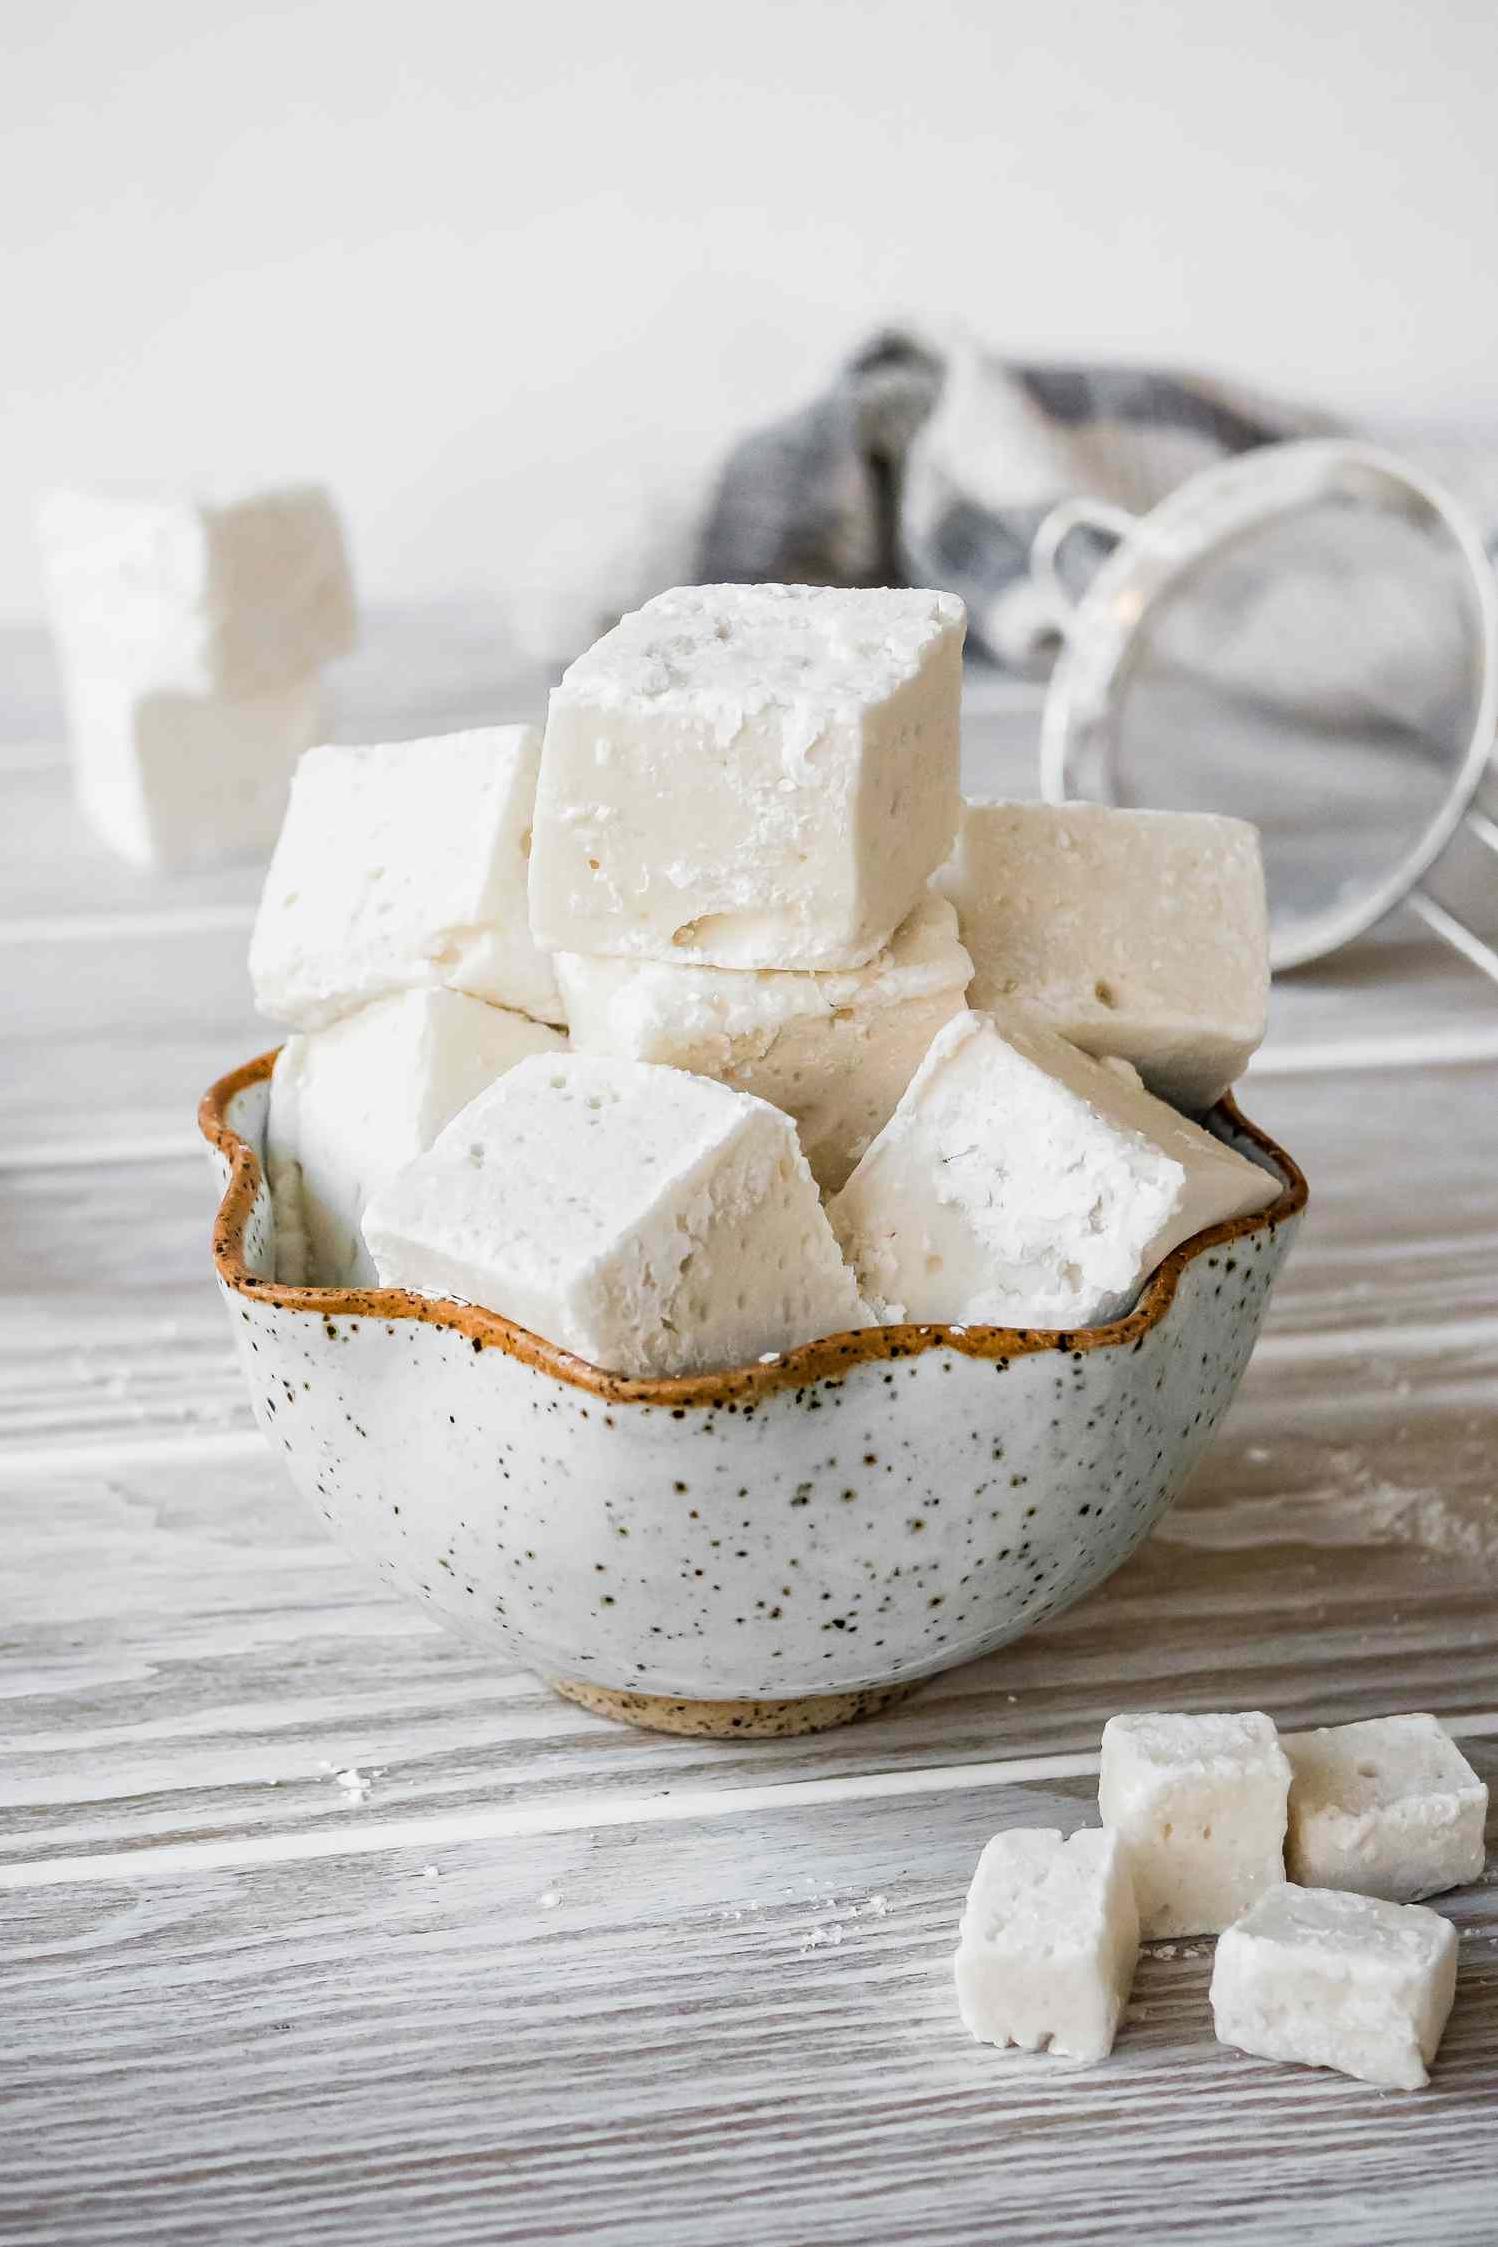  No gelatin, no problem! These vegan marshmallows will impress everyone.